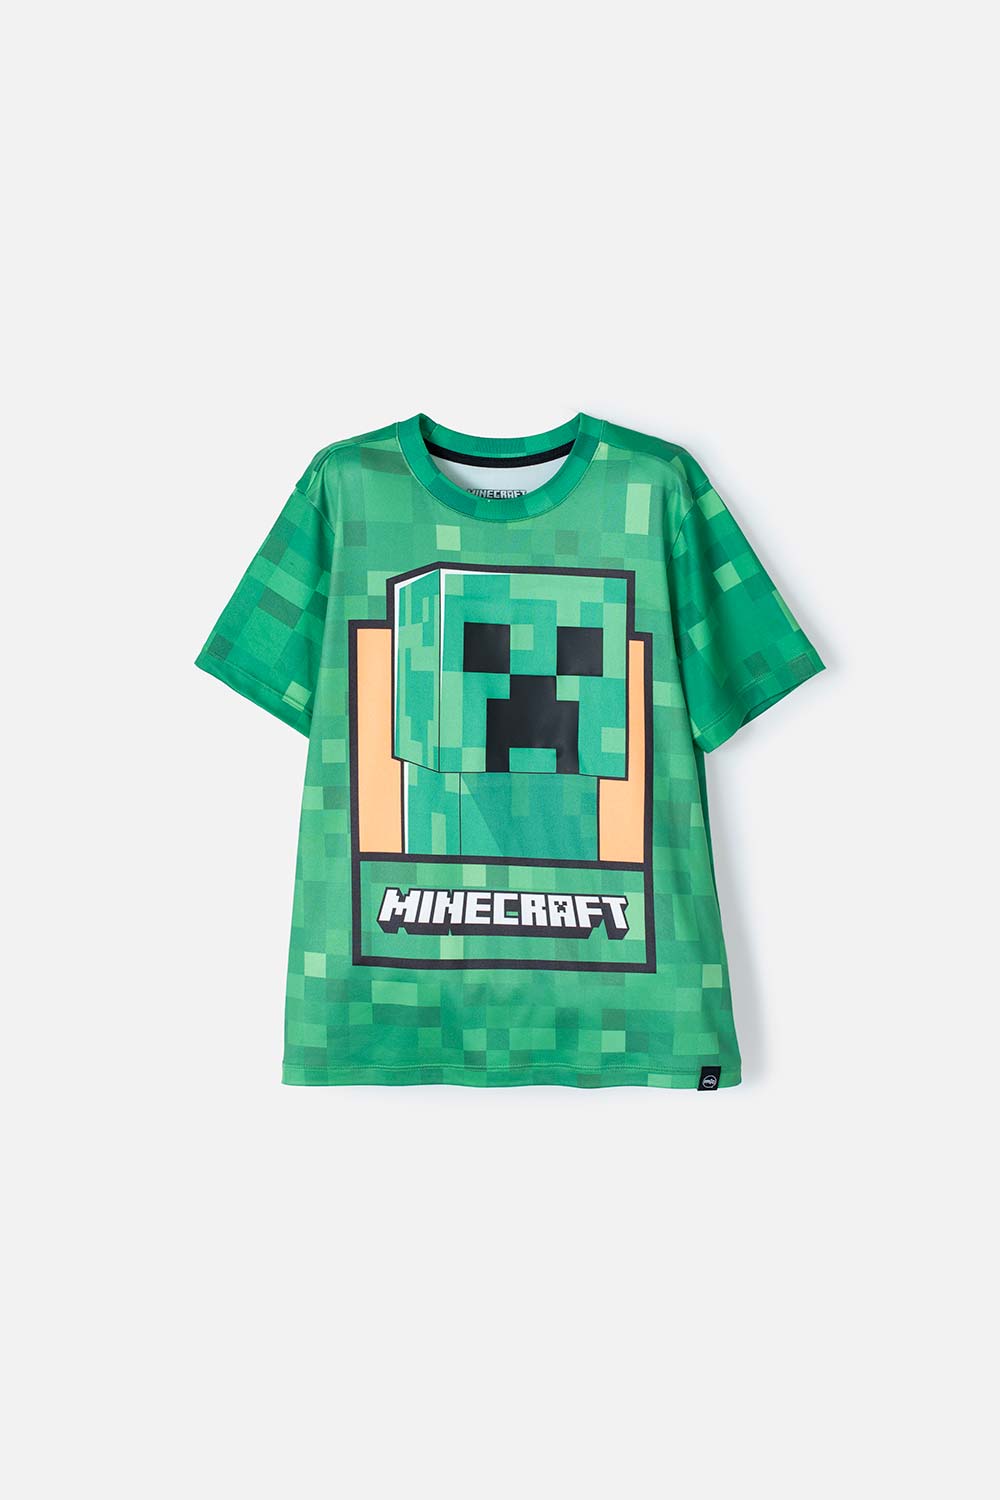 Camiseta de Minecraft verde estampada para niño 6-0